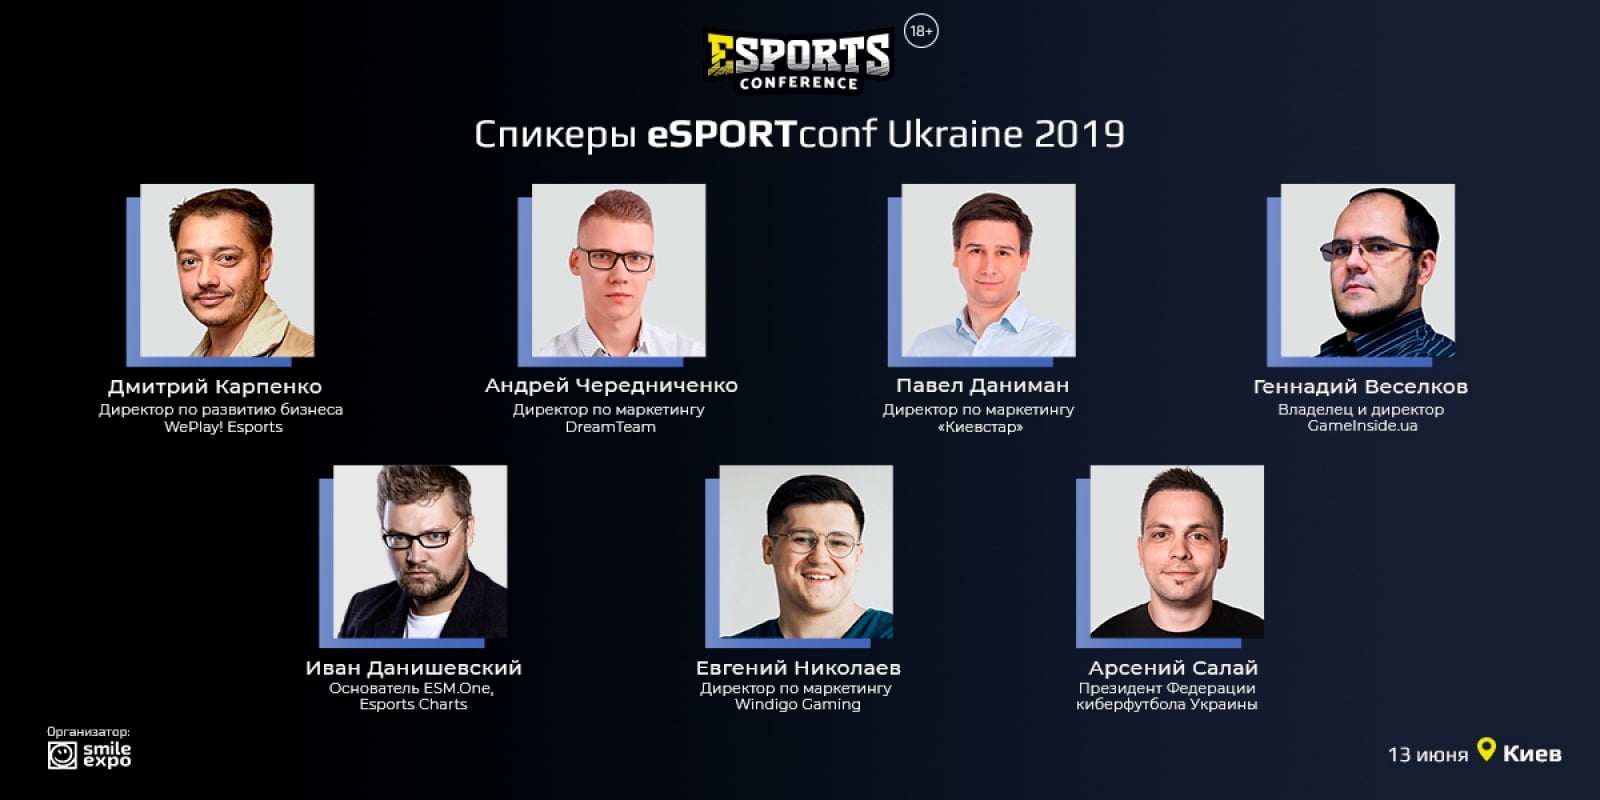 eSPORTconf Ukraine 2019